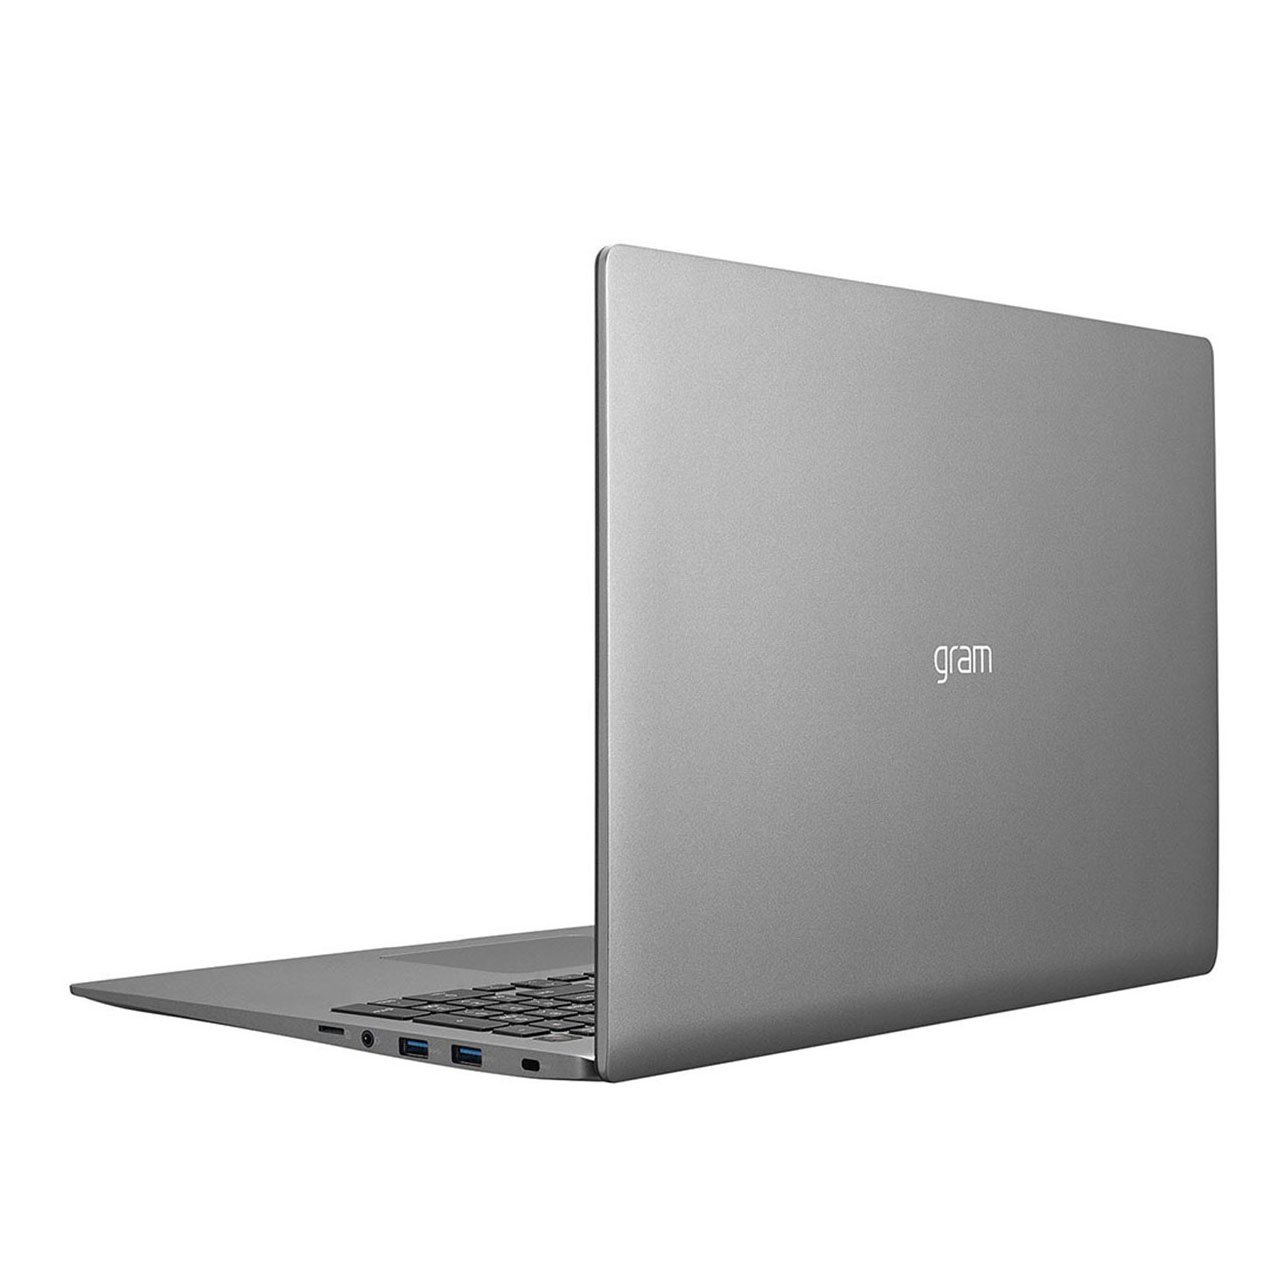 Laptop LG Gram 2020 17Z90N-V.AH75A5 - Dark Silver